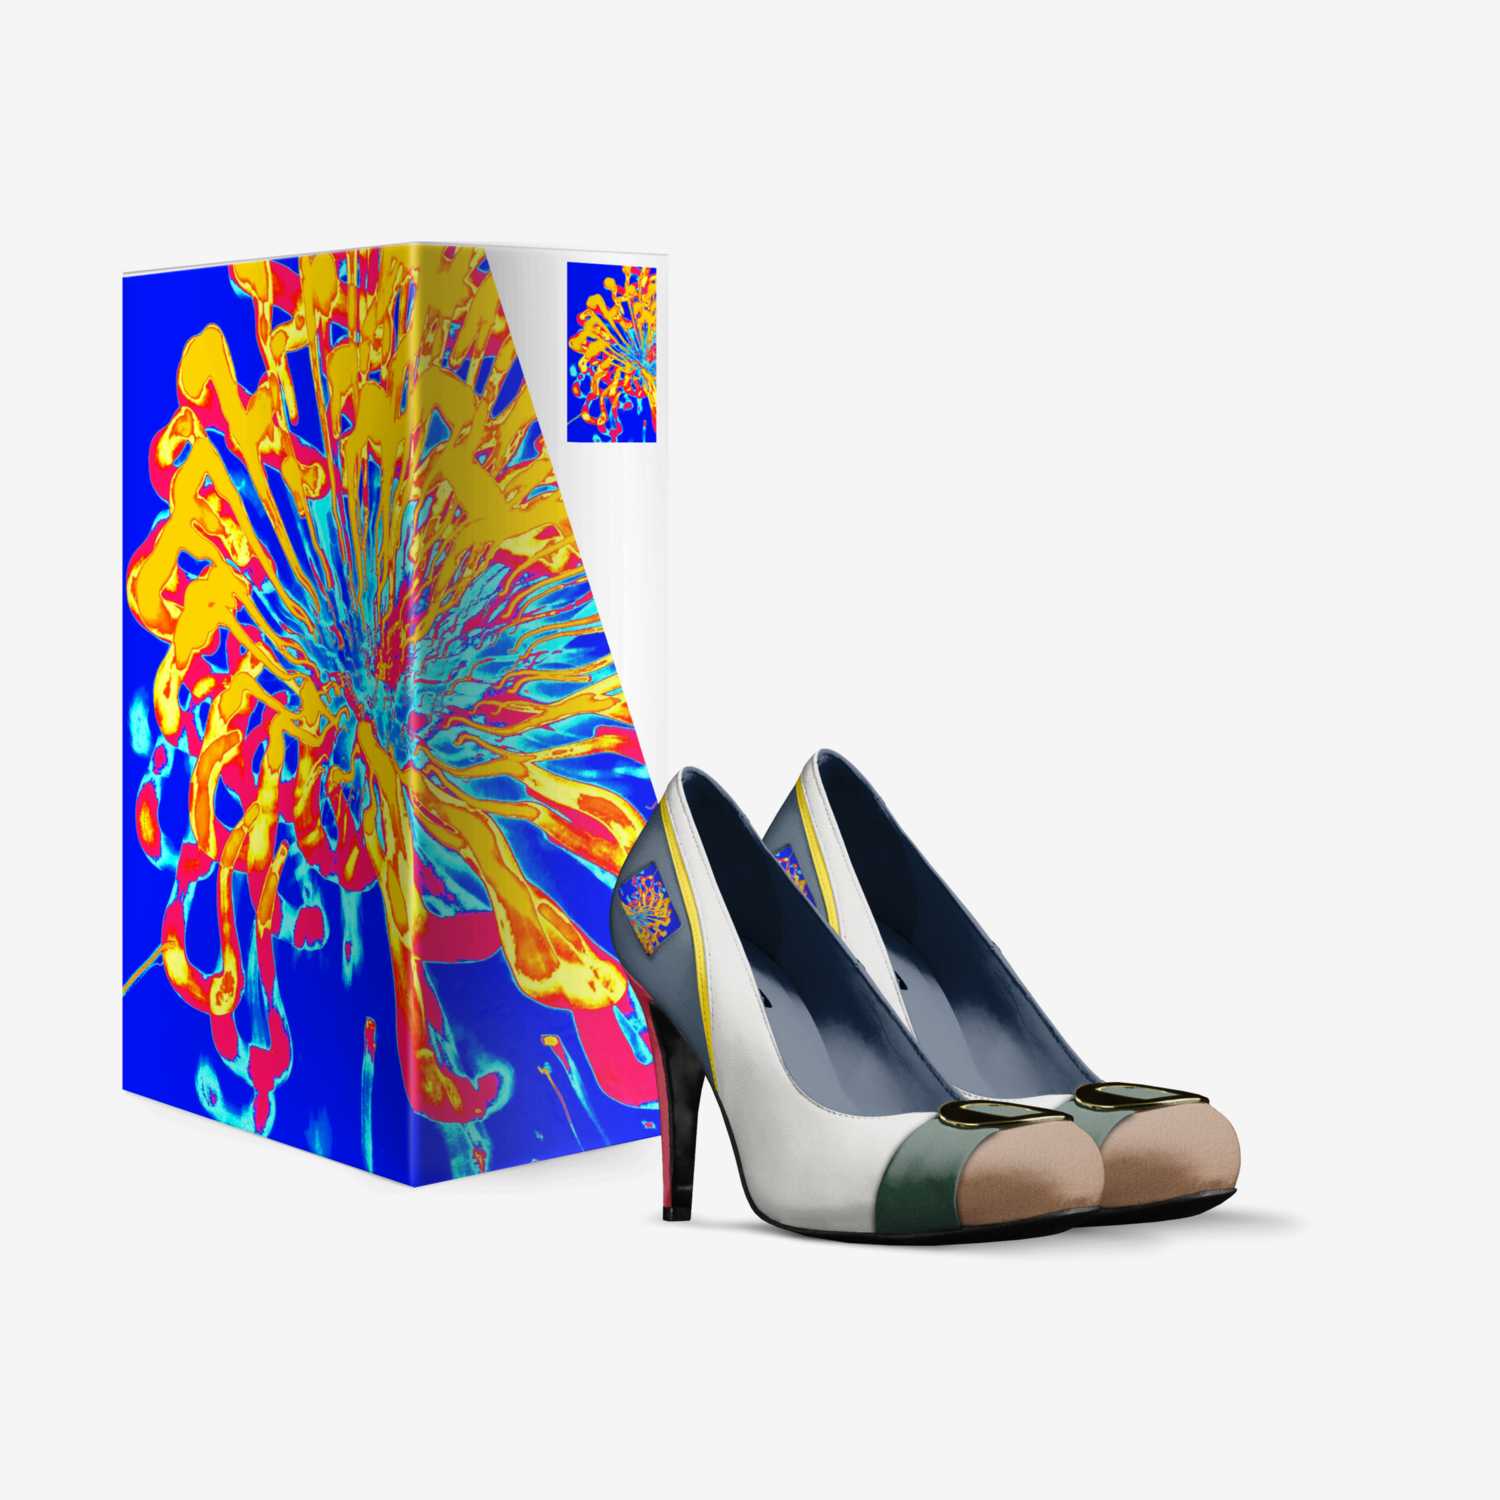 Rina custom made in Italy shoes by Dan Hurwitz | Box view